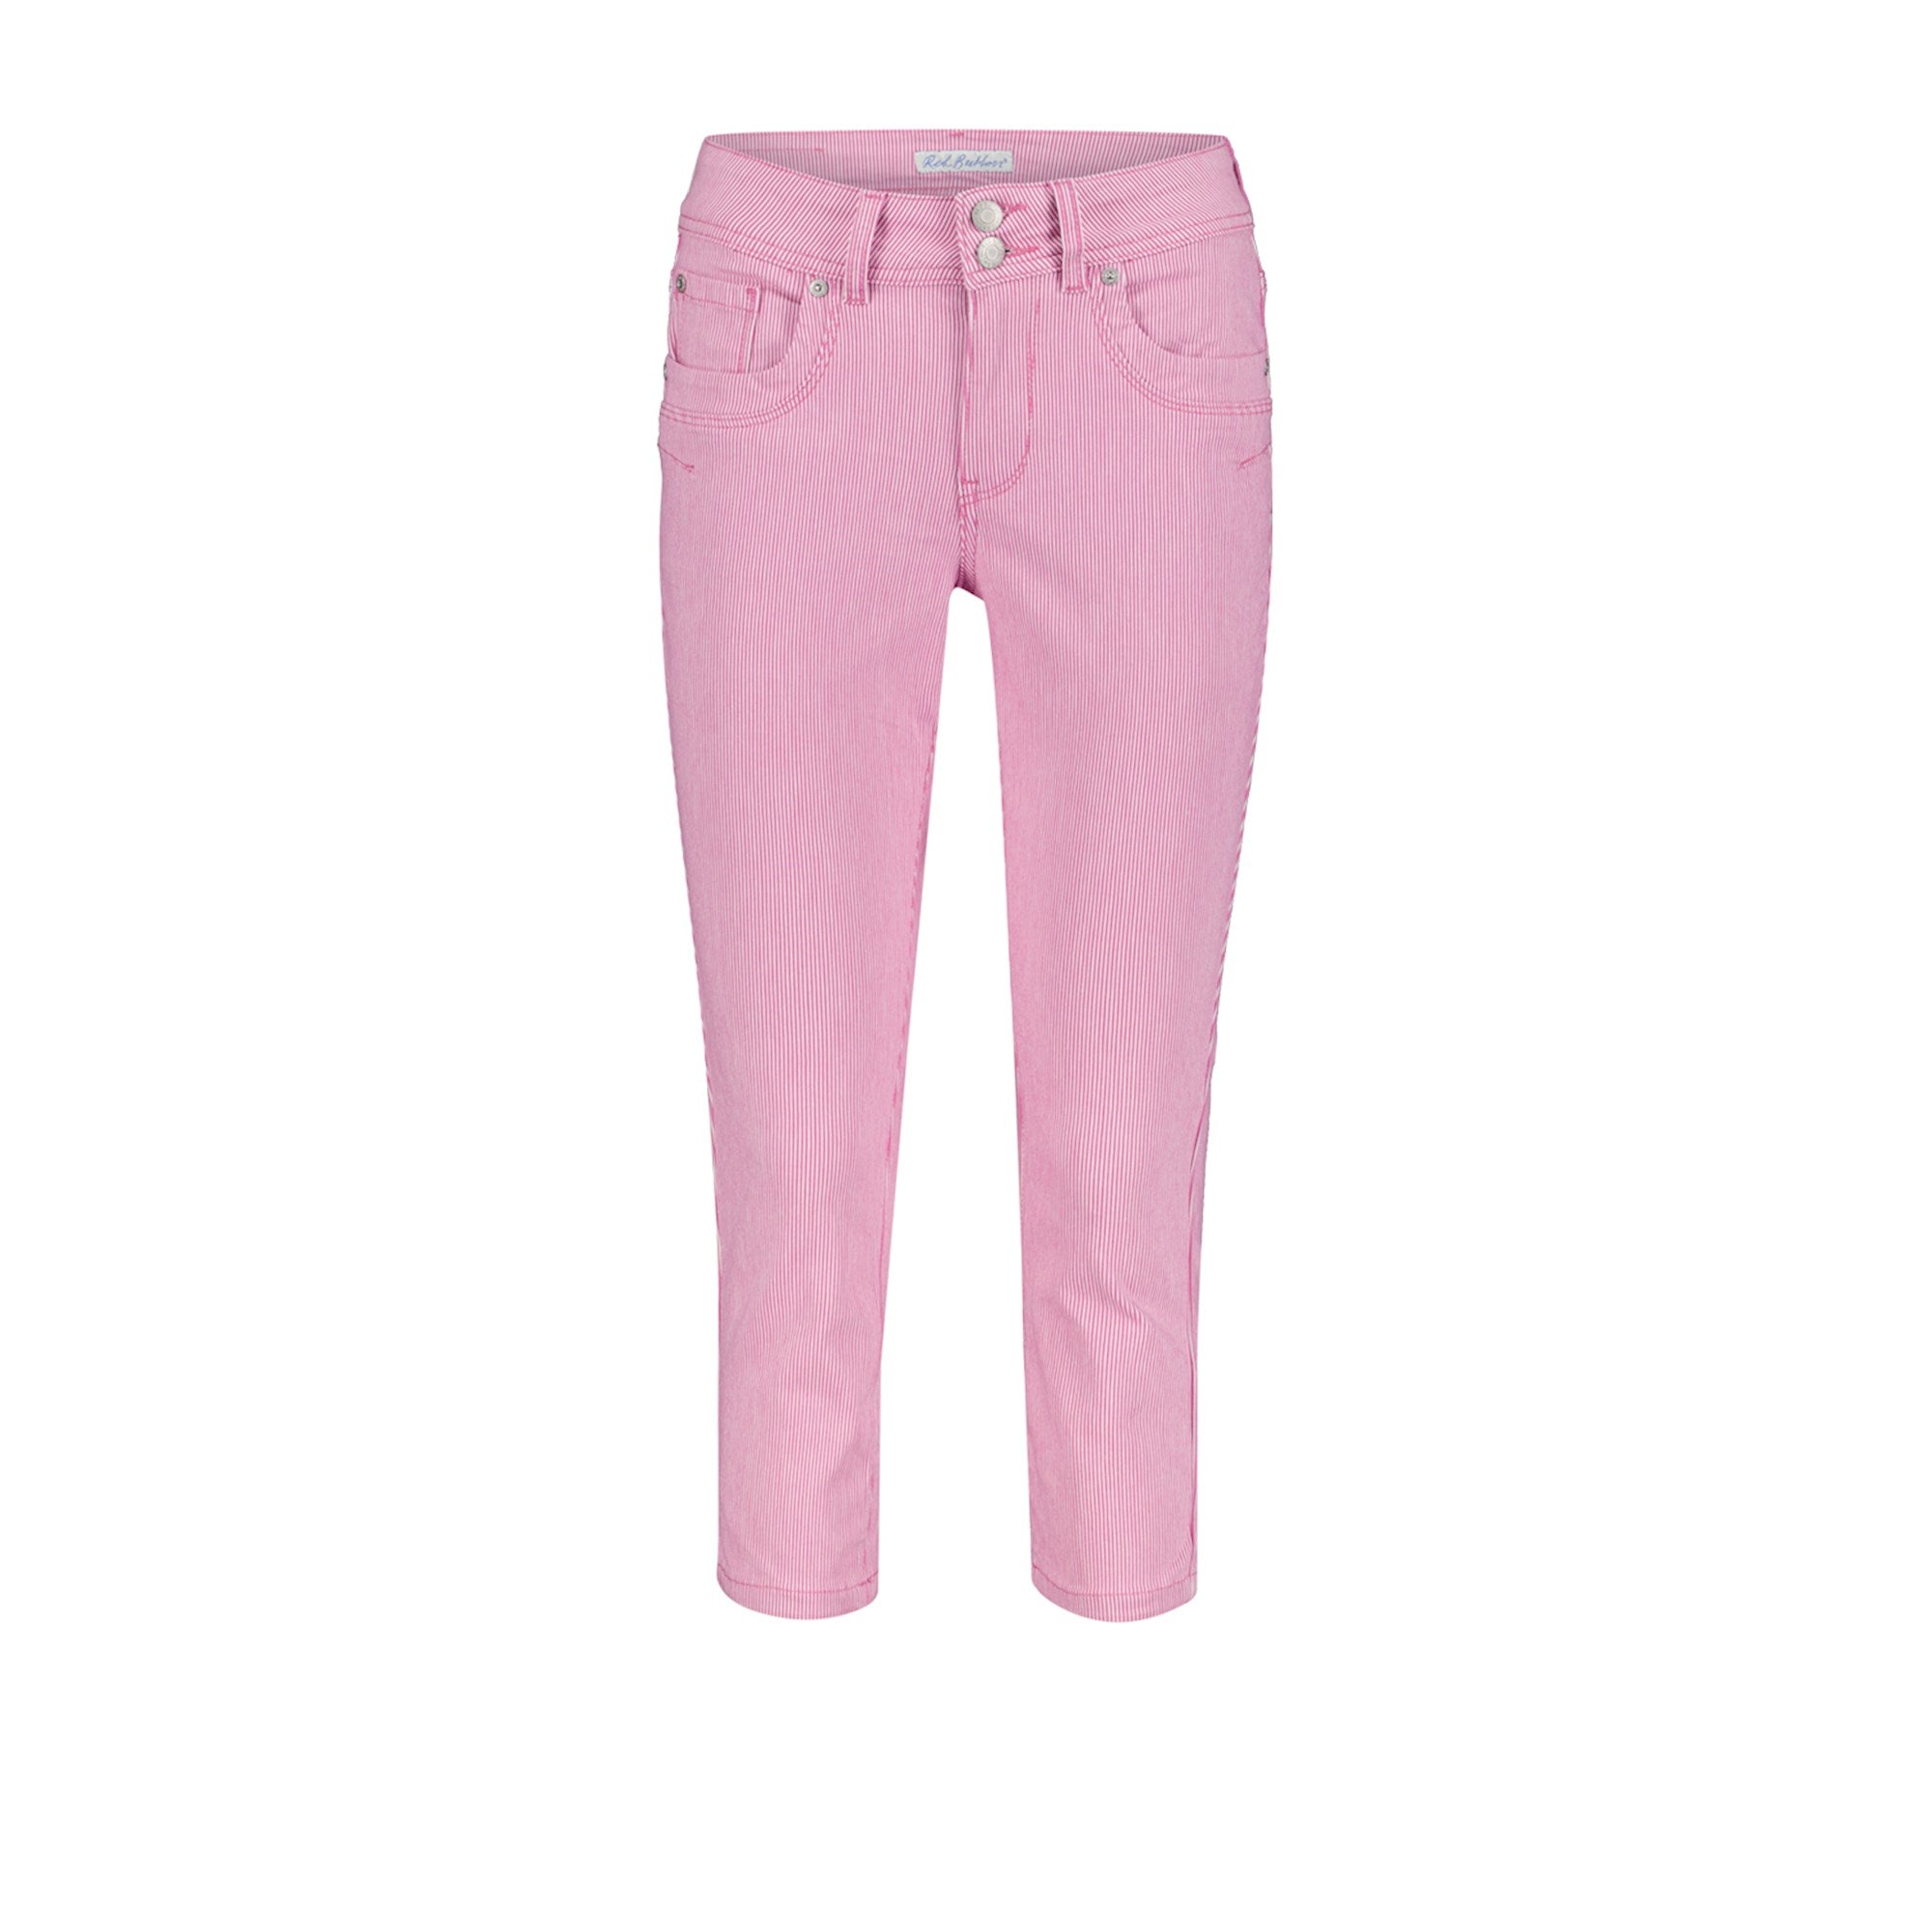 Suze Cropped Jeans in Pink Stripe